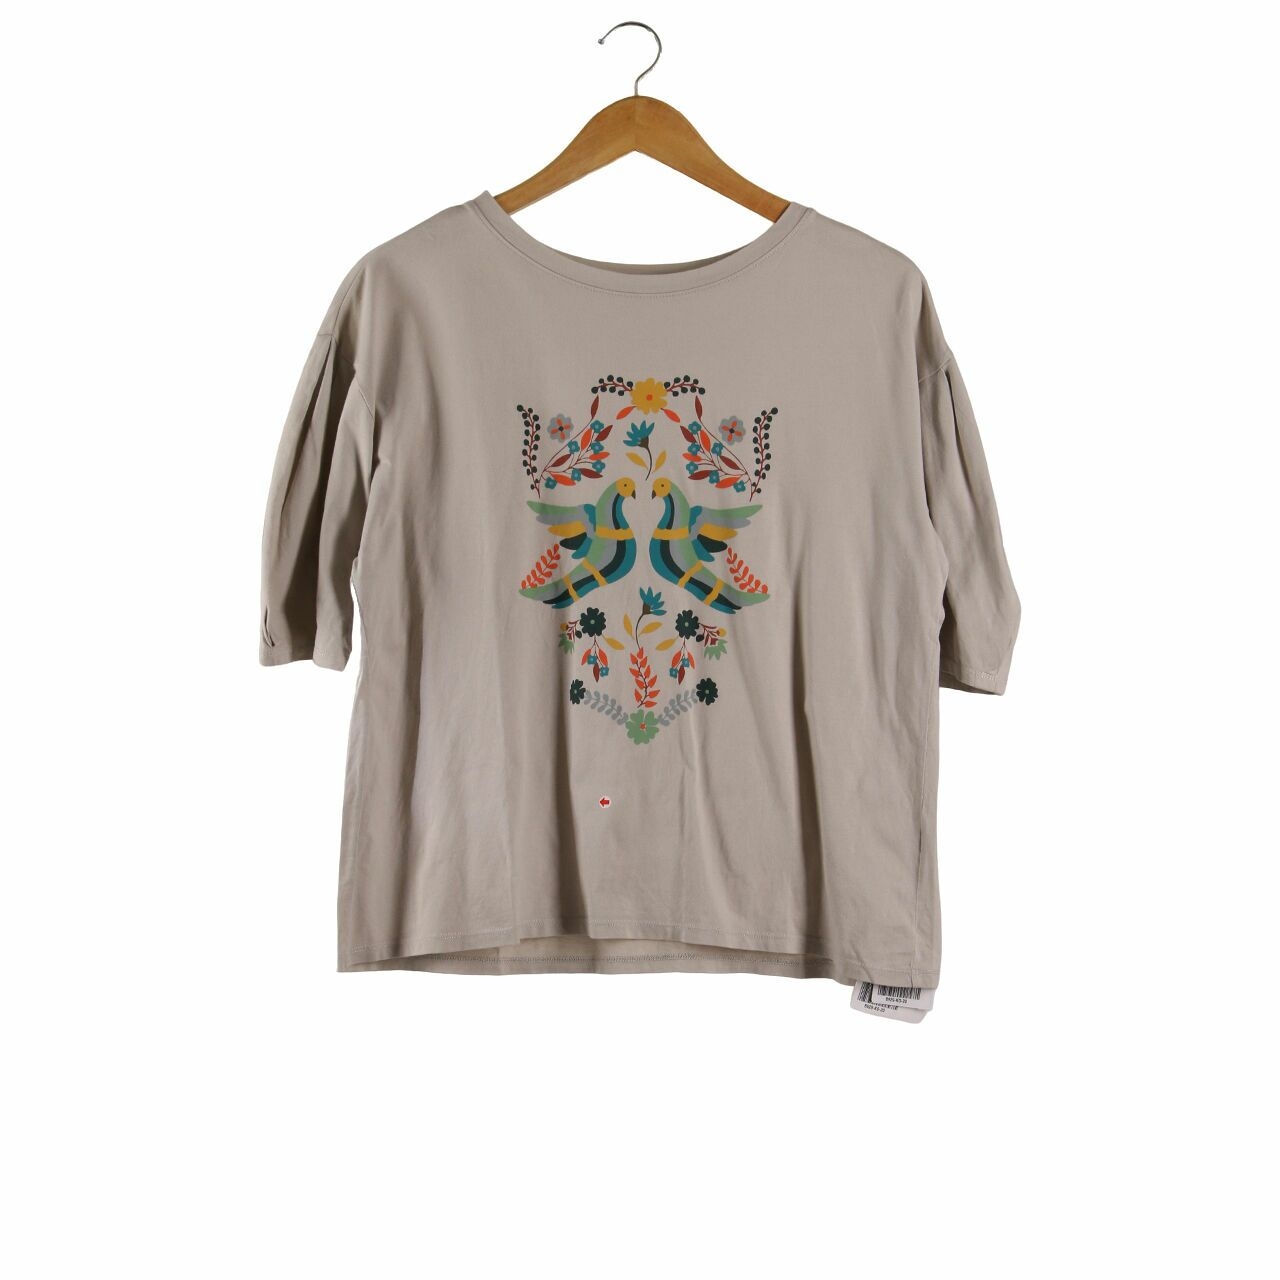 UNIQLO Anna Sui Light Grey Animal Print T-Shirt